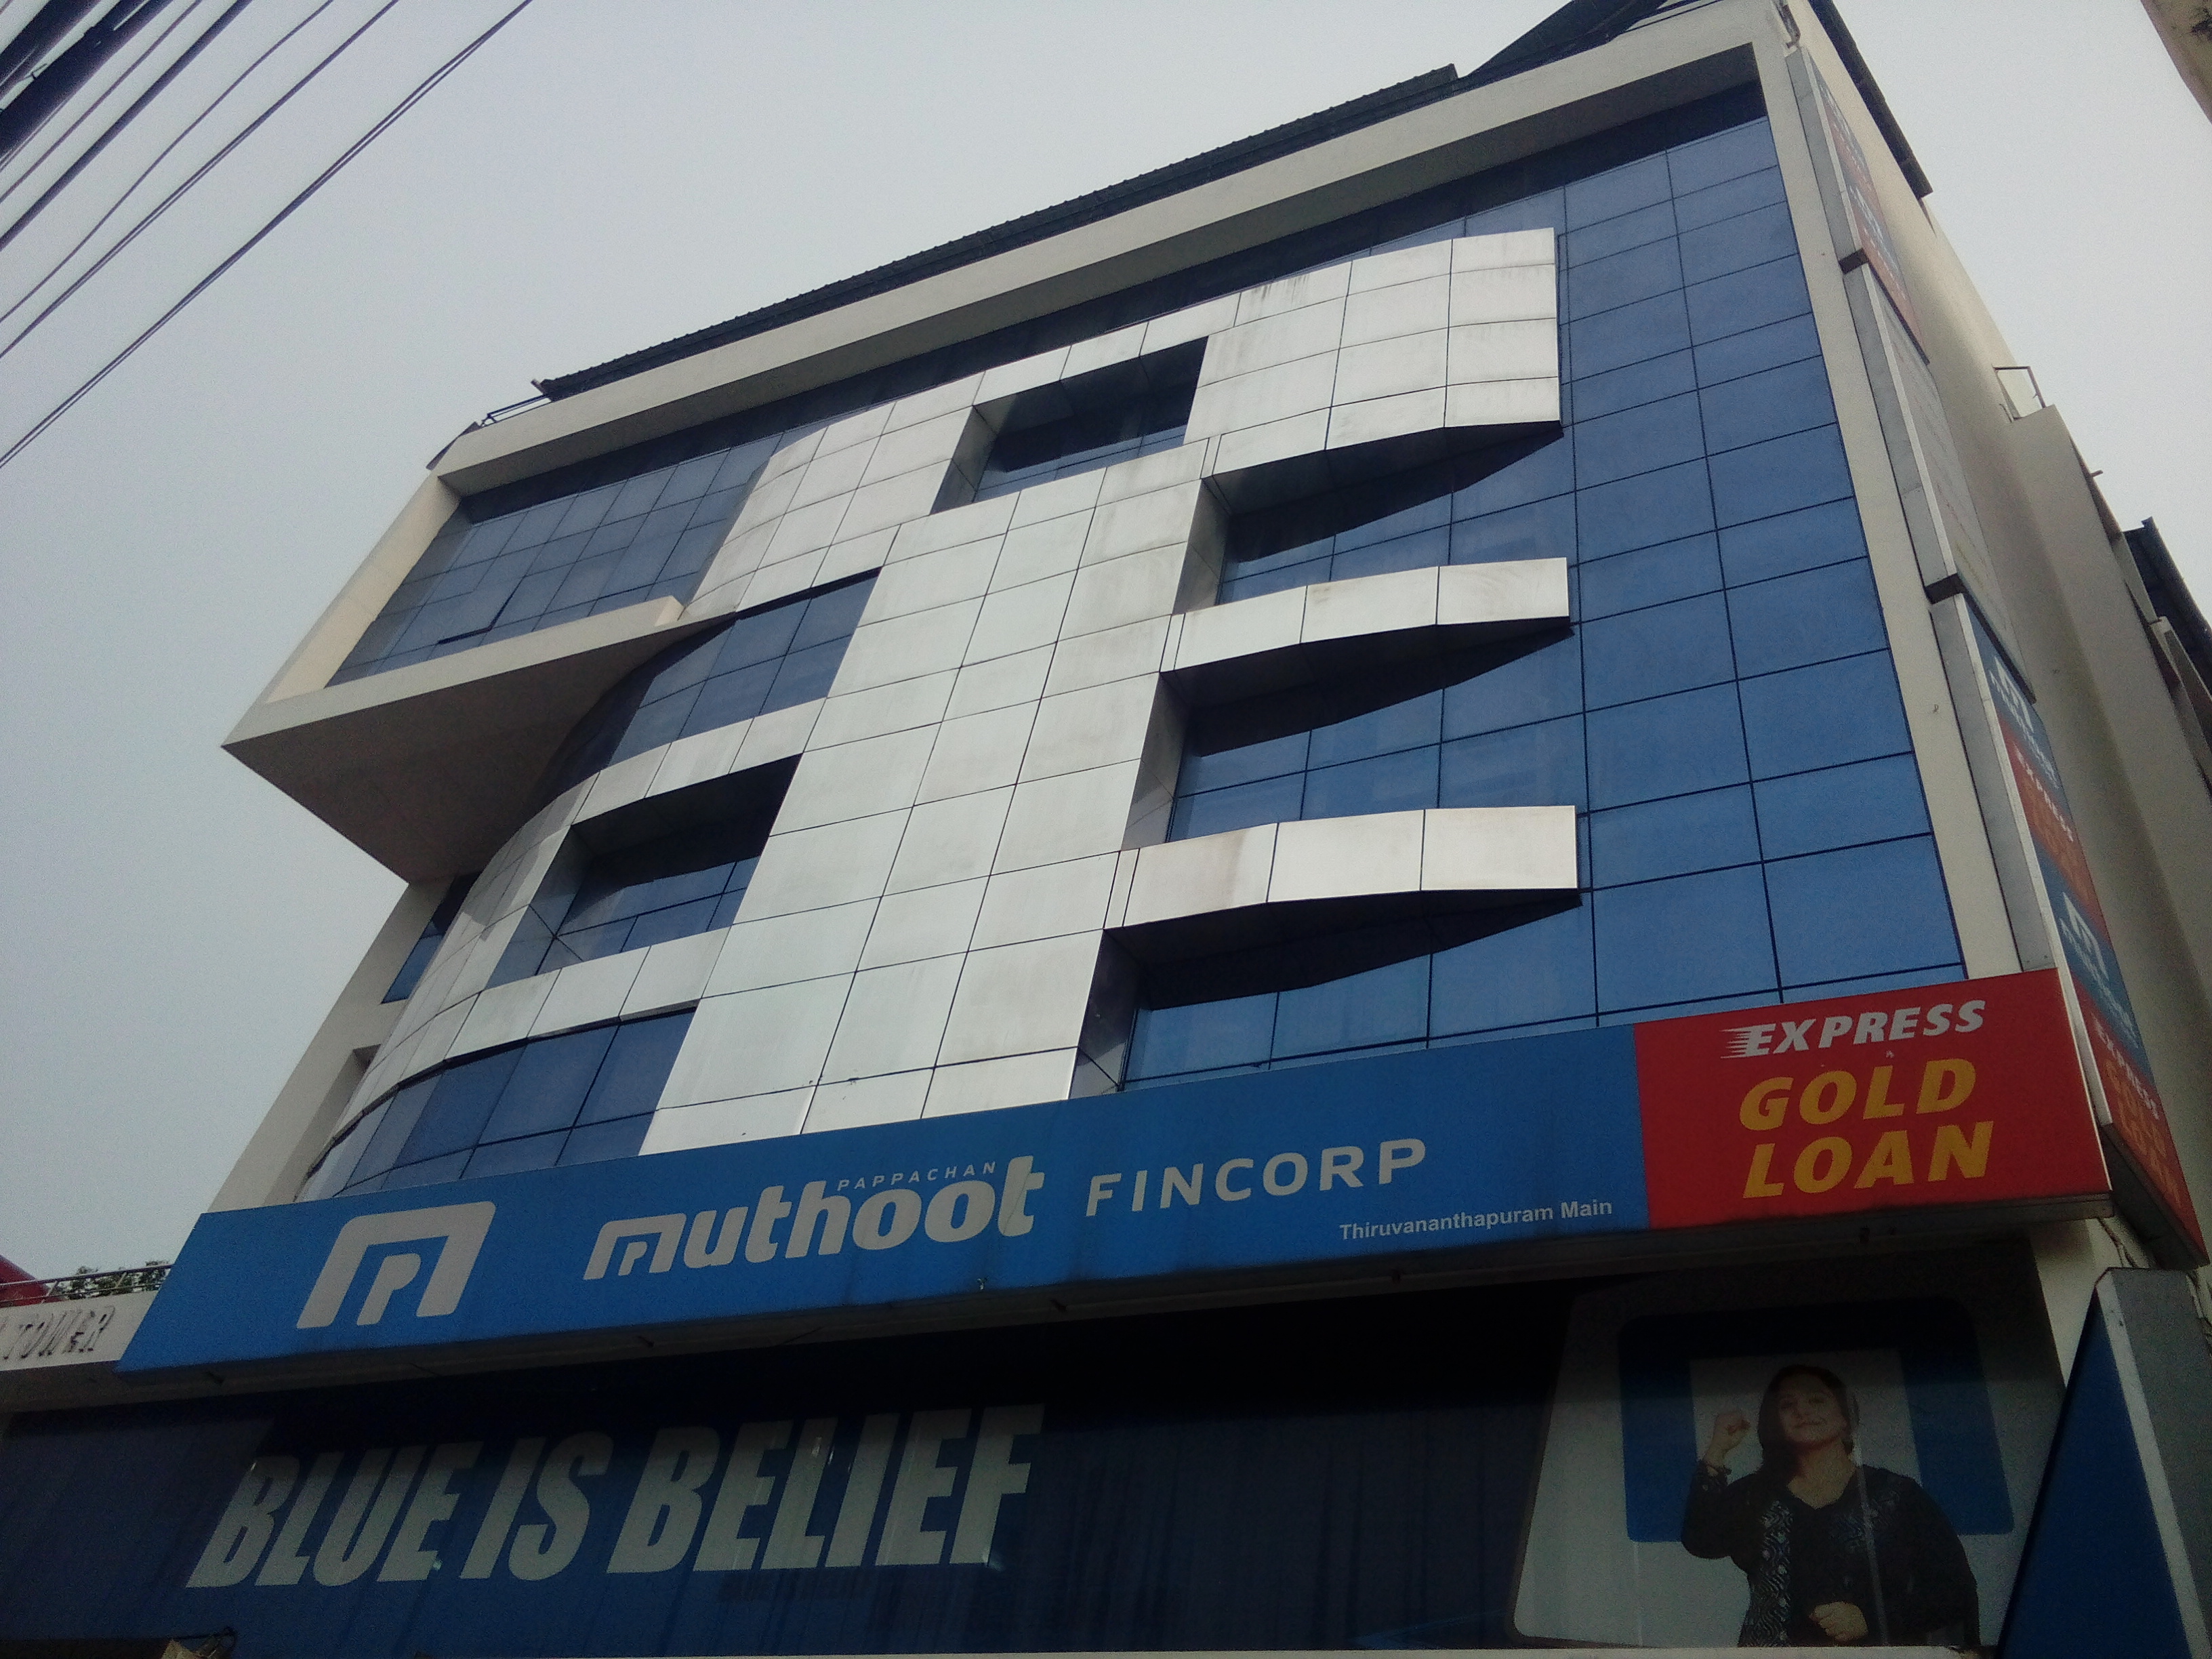 Muthoot Fincorp Gold Loan Services in Punnen Road, Thiruvananthapuram, Kerala